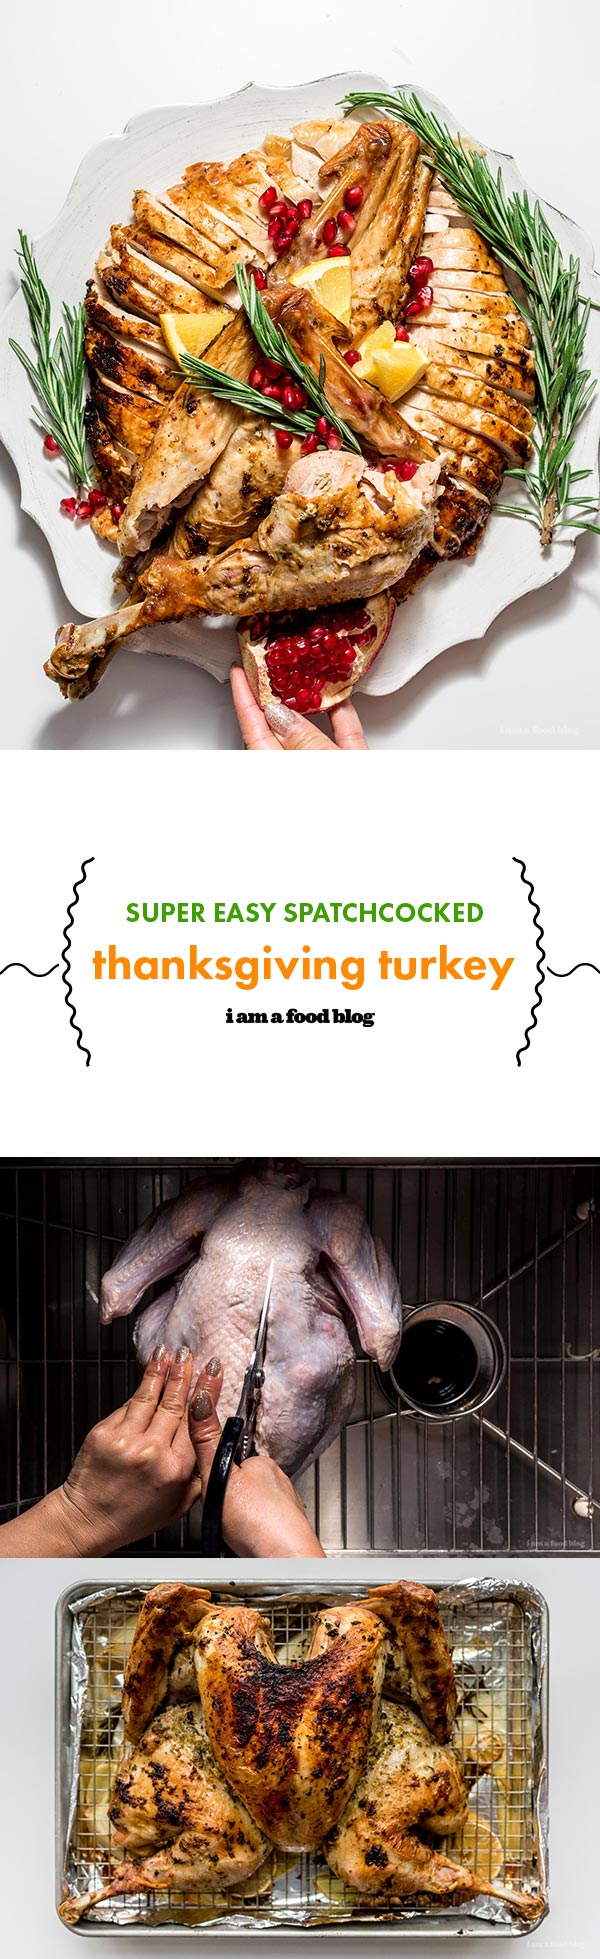 Spatchcock Roast Turkey Ntụziaka | www.http://elcomensal.es/